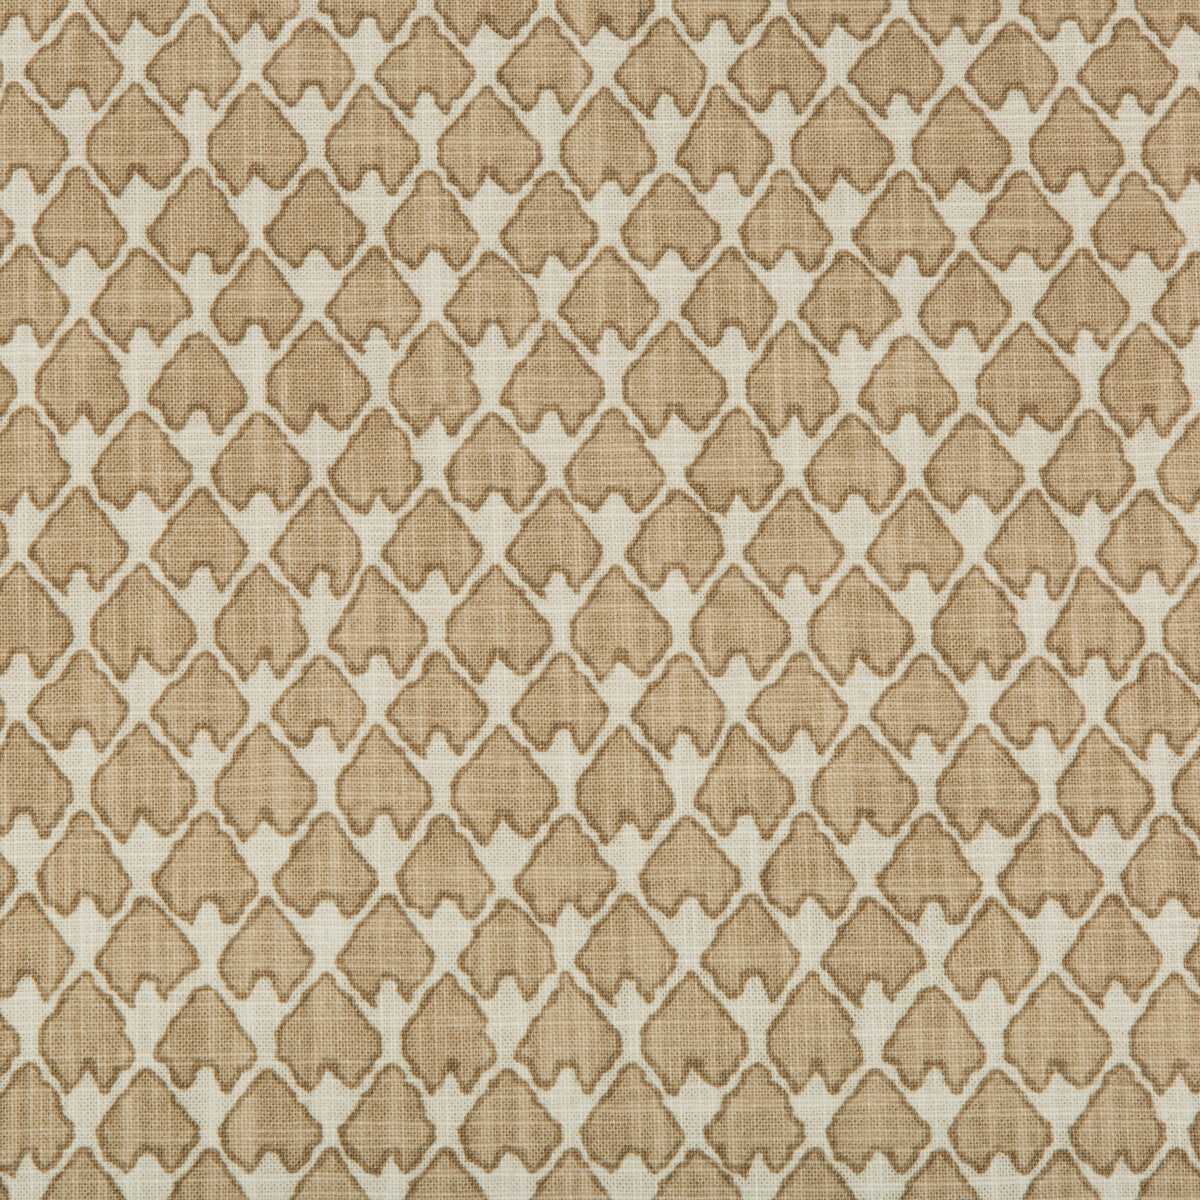 Kravet Basics fabric in kahuku-106 color - pattern KAHUKU.106.0 - by Kravet Basics